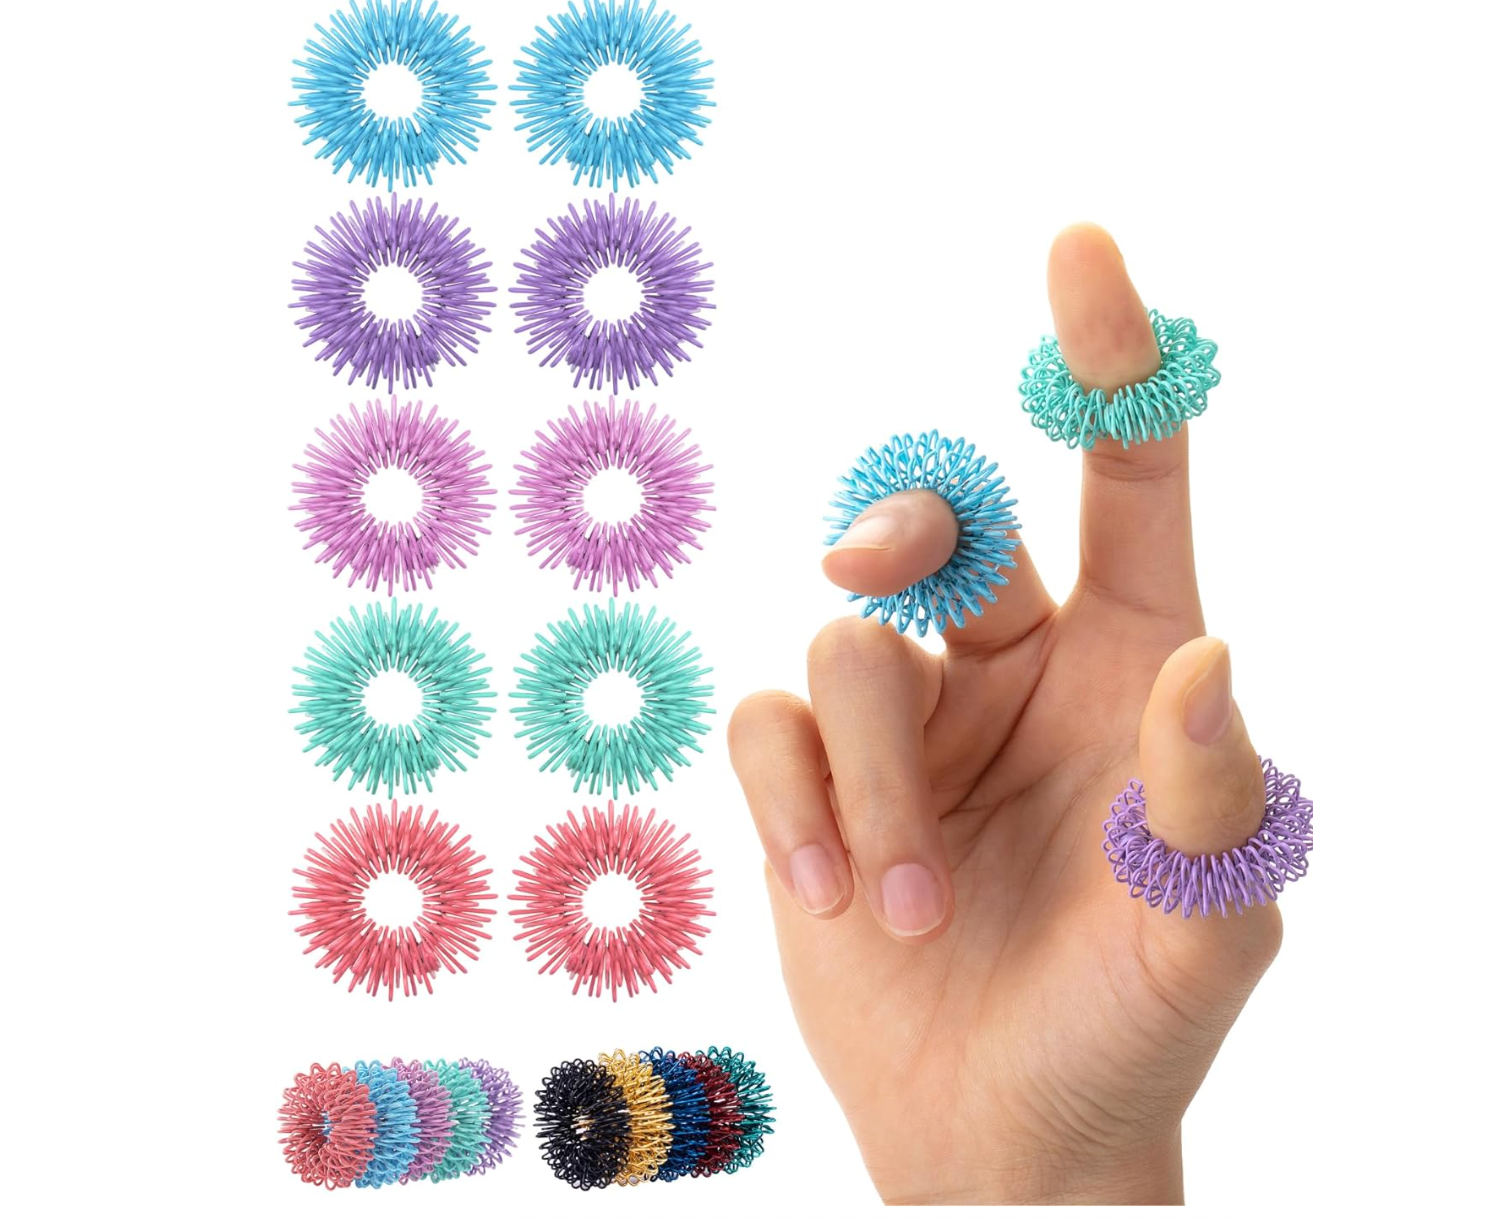 Spiky Sensory Rings, 10 Pack, Pastel Colors, Stress Relief Fidget Sensory Toys